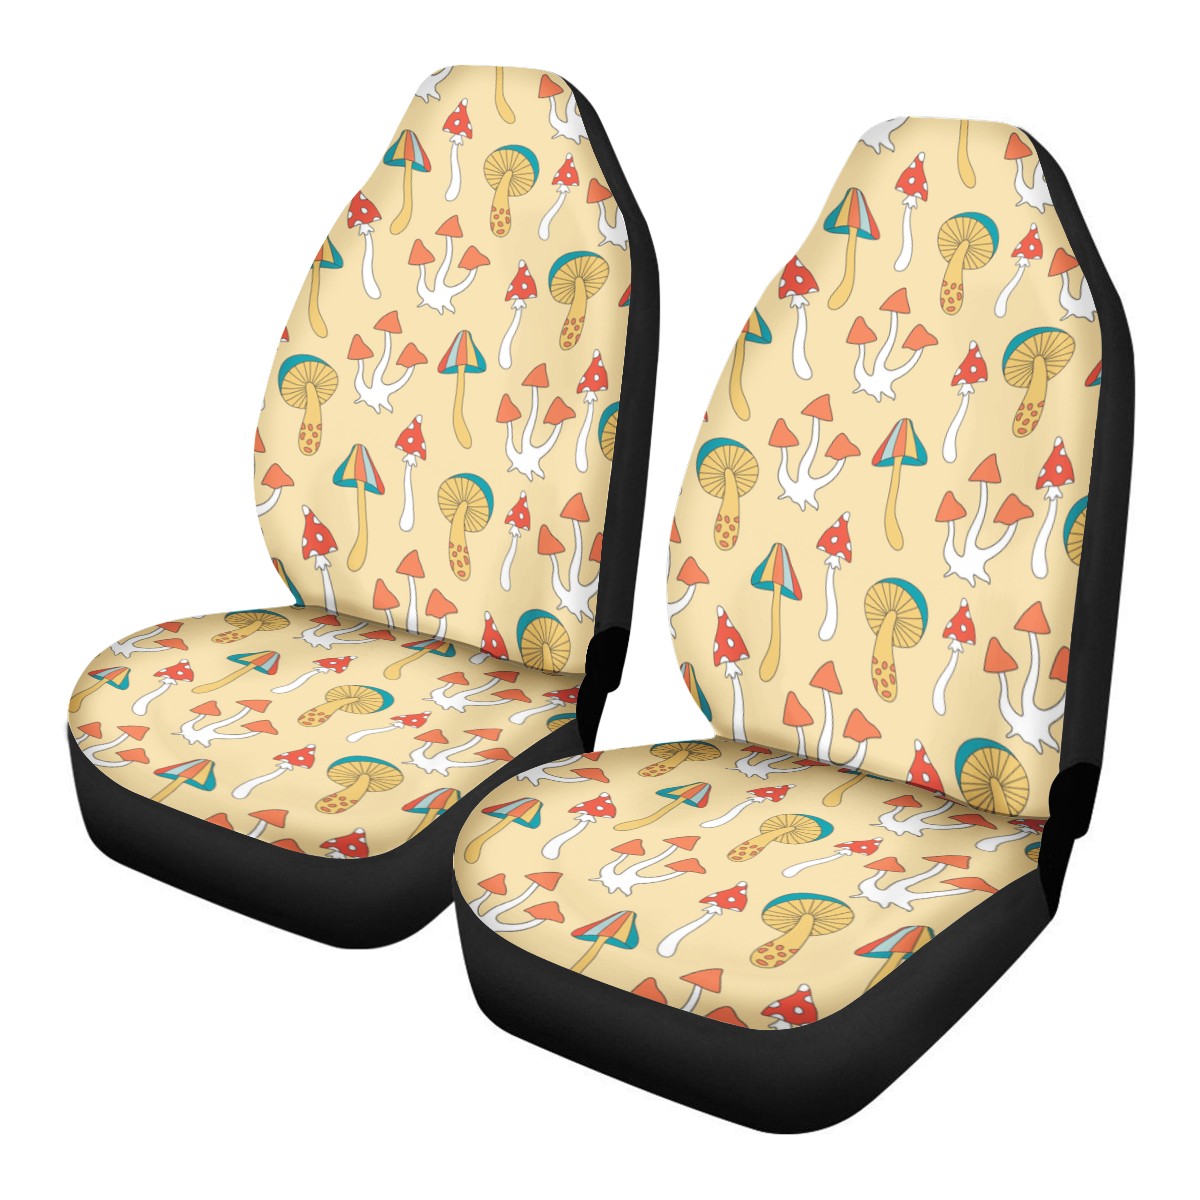 Vintage Hippie Mushrooms Car Seat Covers